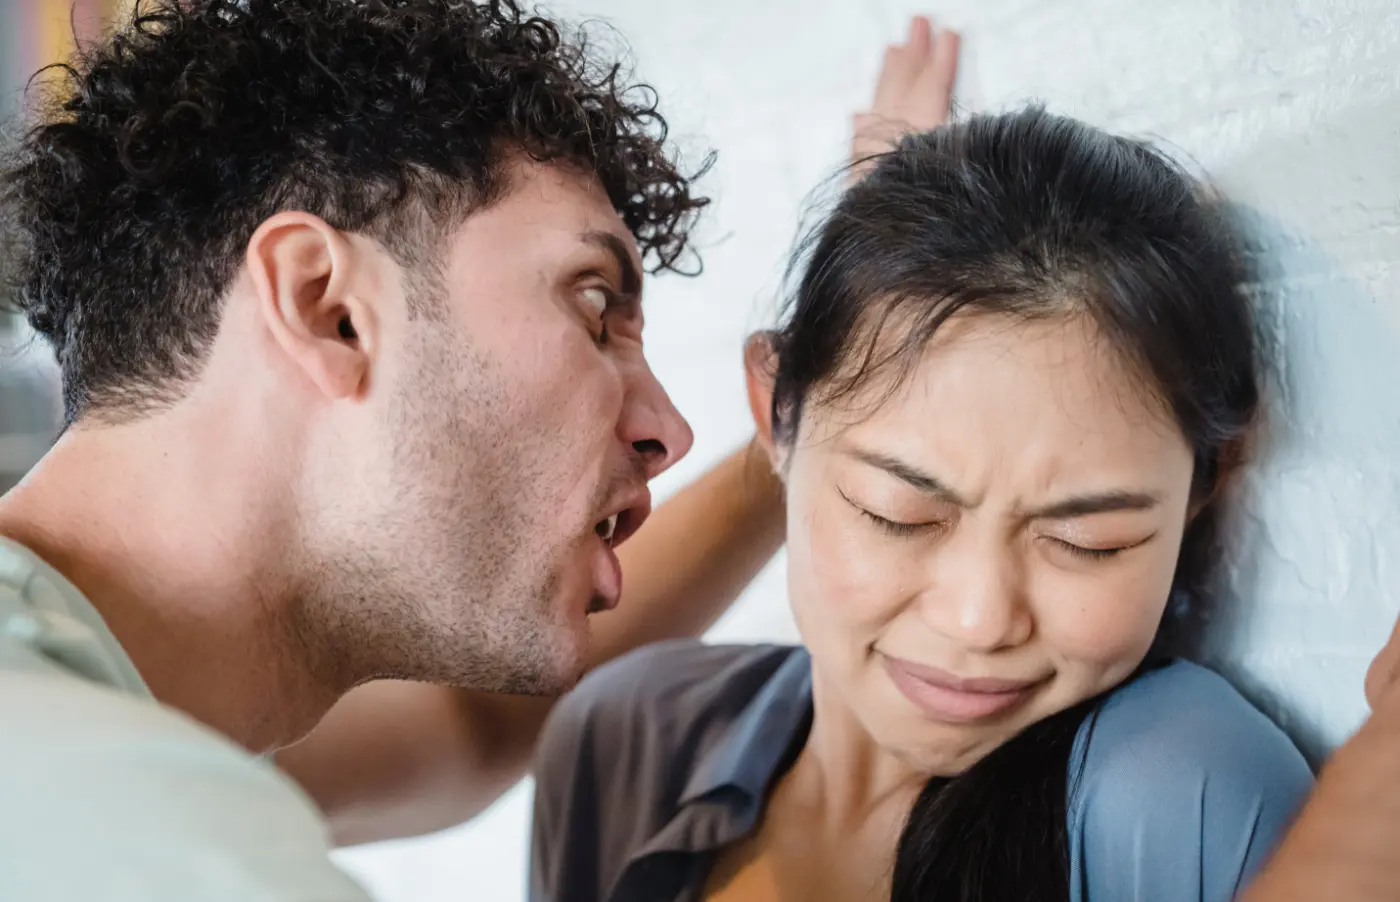 An aggressive man shouting at a fearful woman